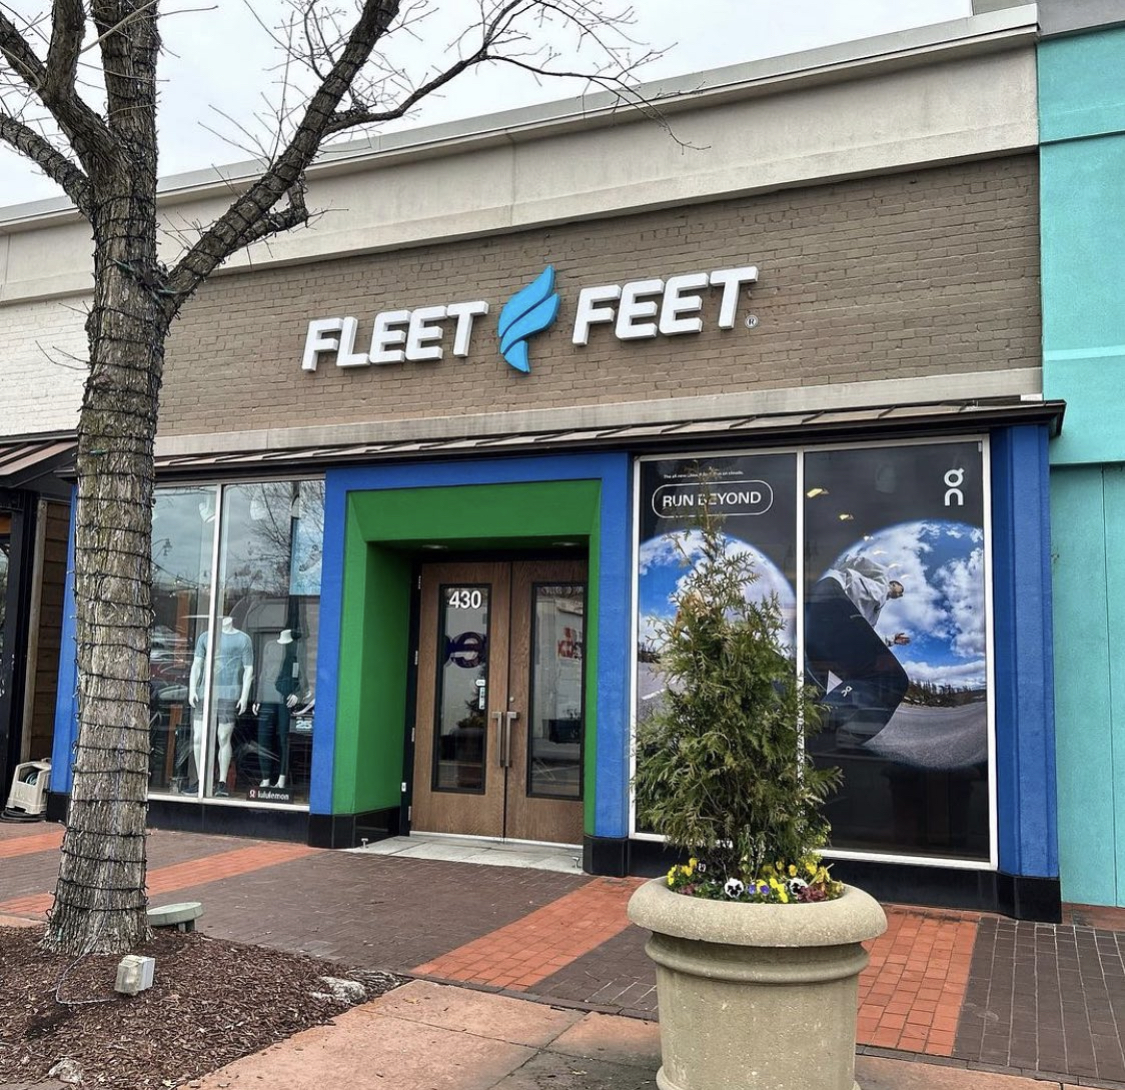 Visit our fourth location! Fleet Feet Raleigh